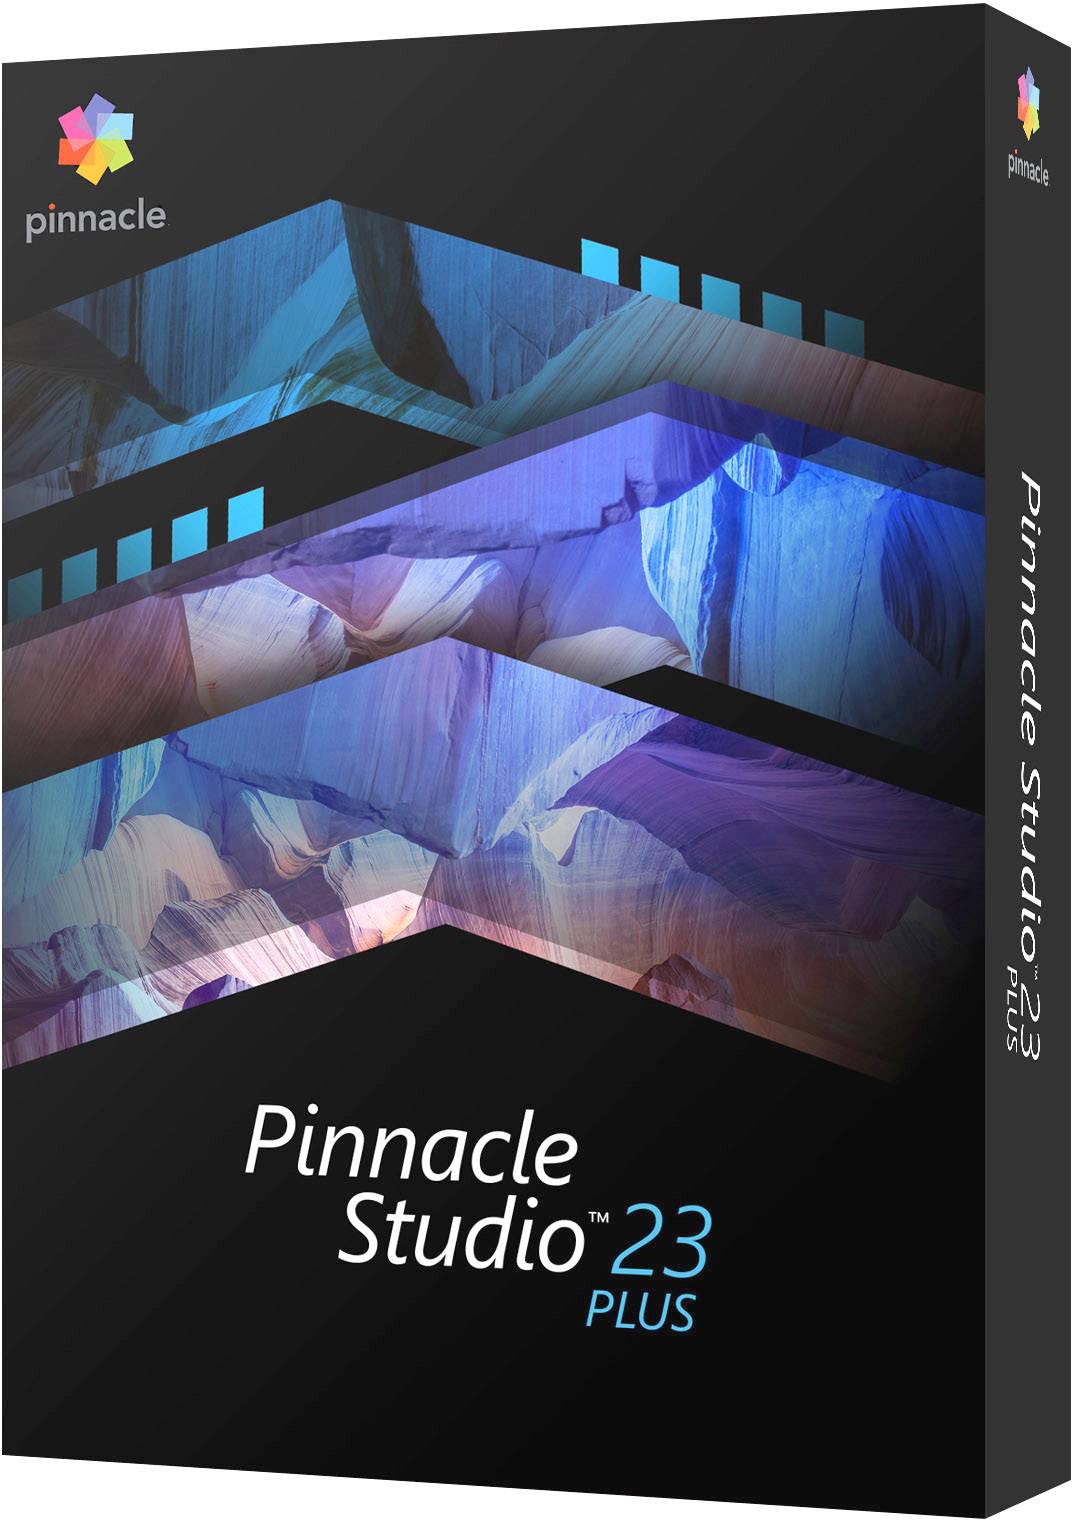 is pinnacle studio 23 good for video editing